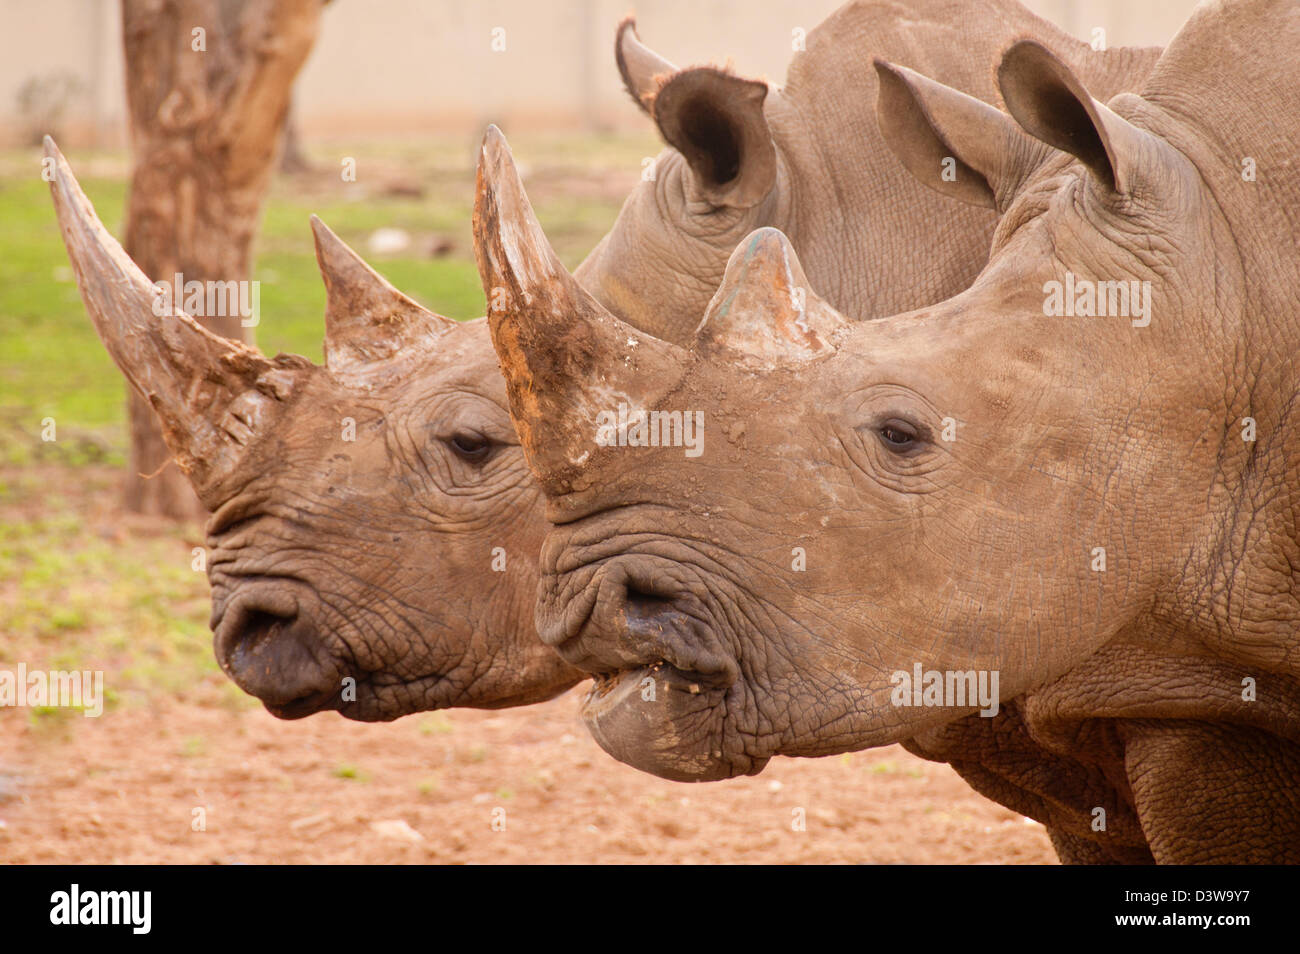 Two rhinoceroses in profile Stock Photo